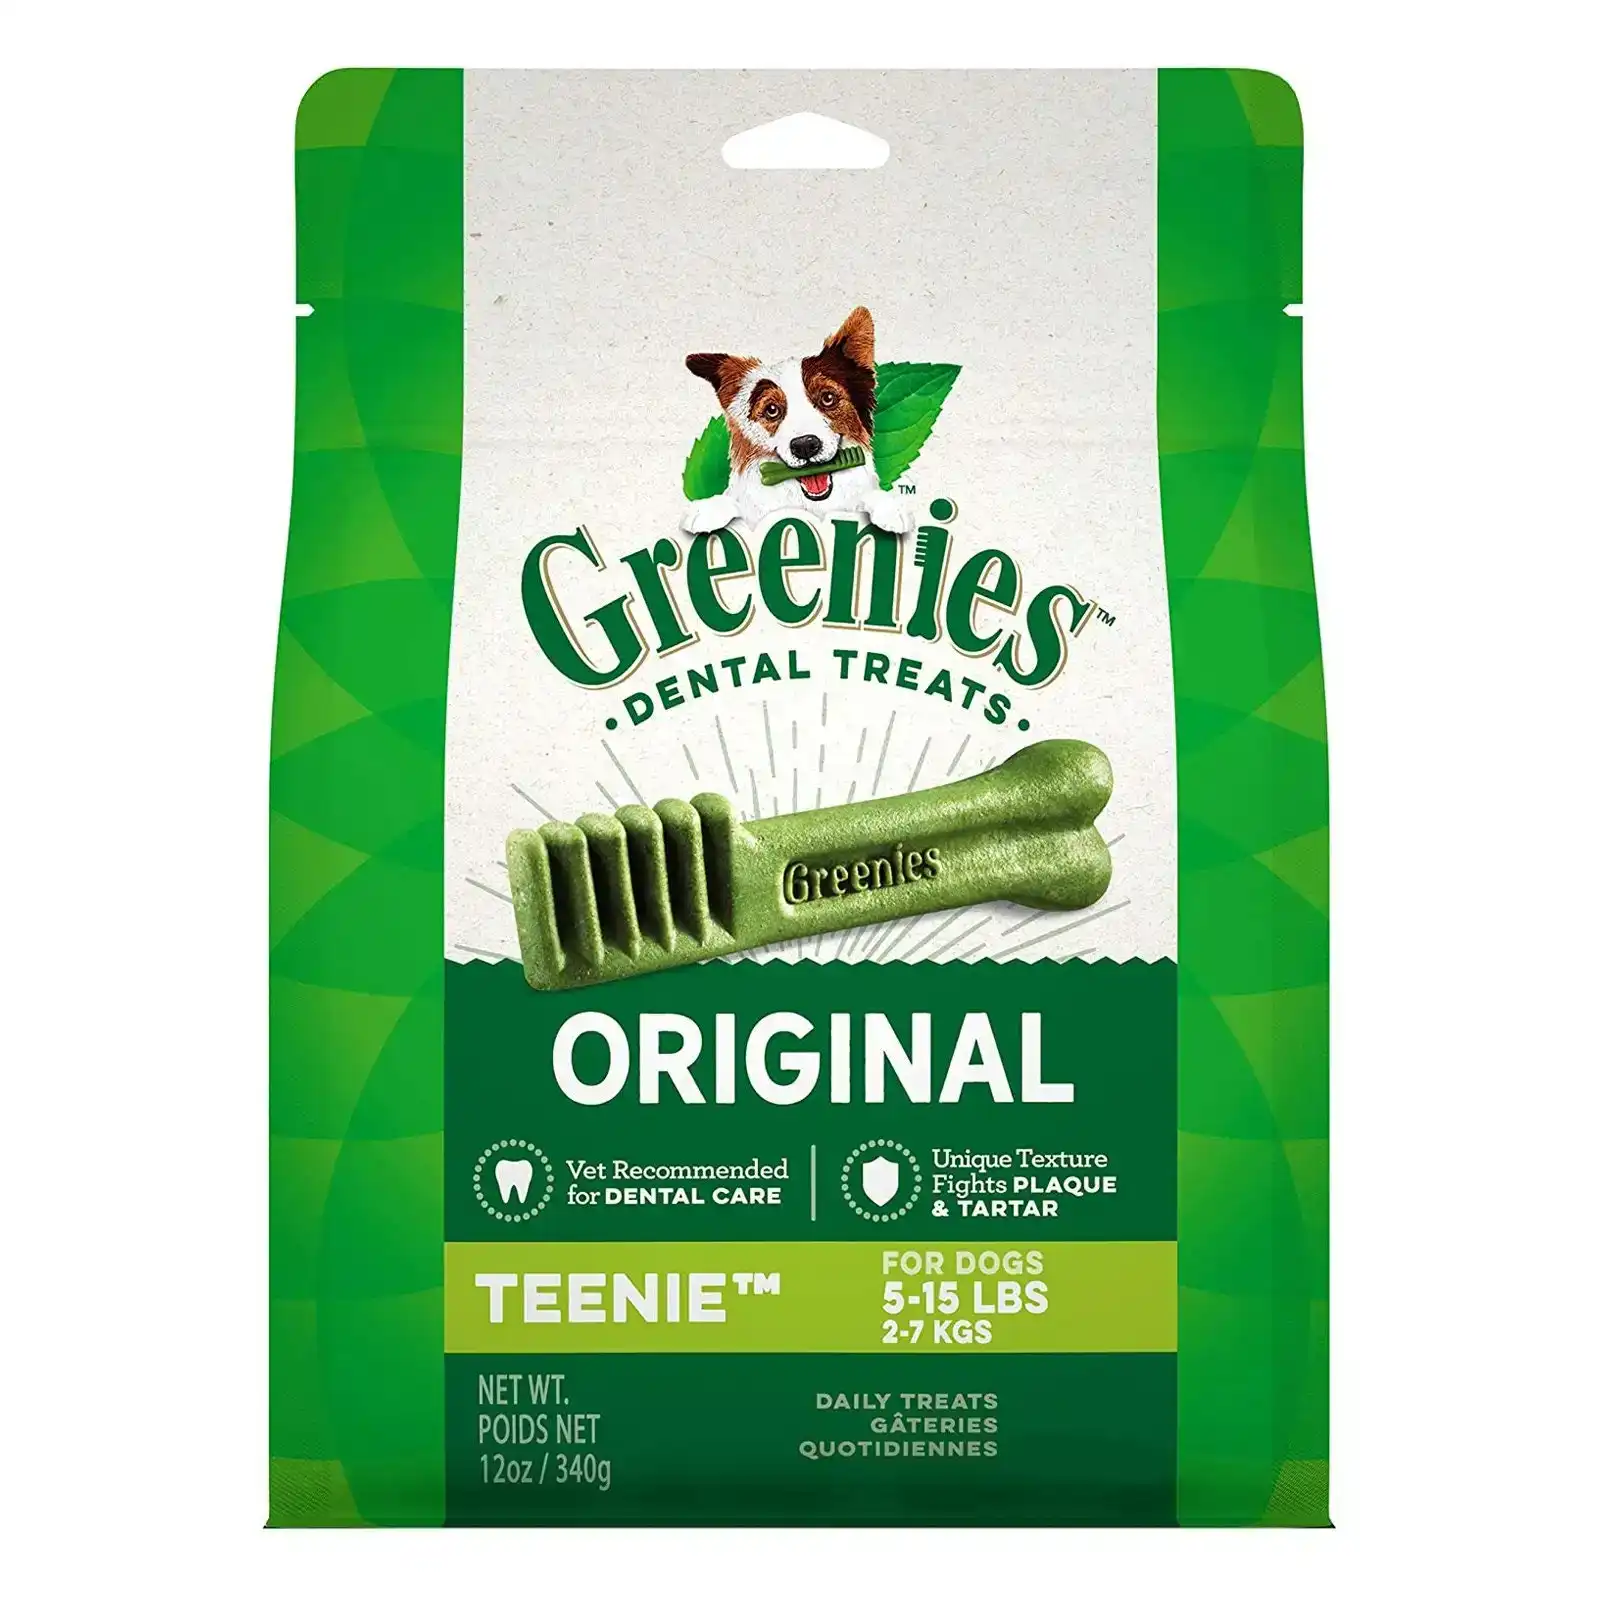 GREENIES Original Dental Treats Teenie for Dogs 2 to 7 Kg 340 Gms